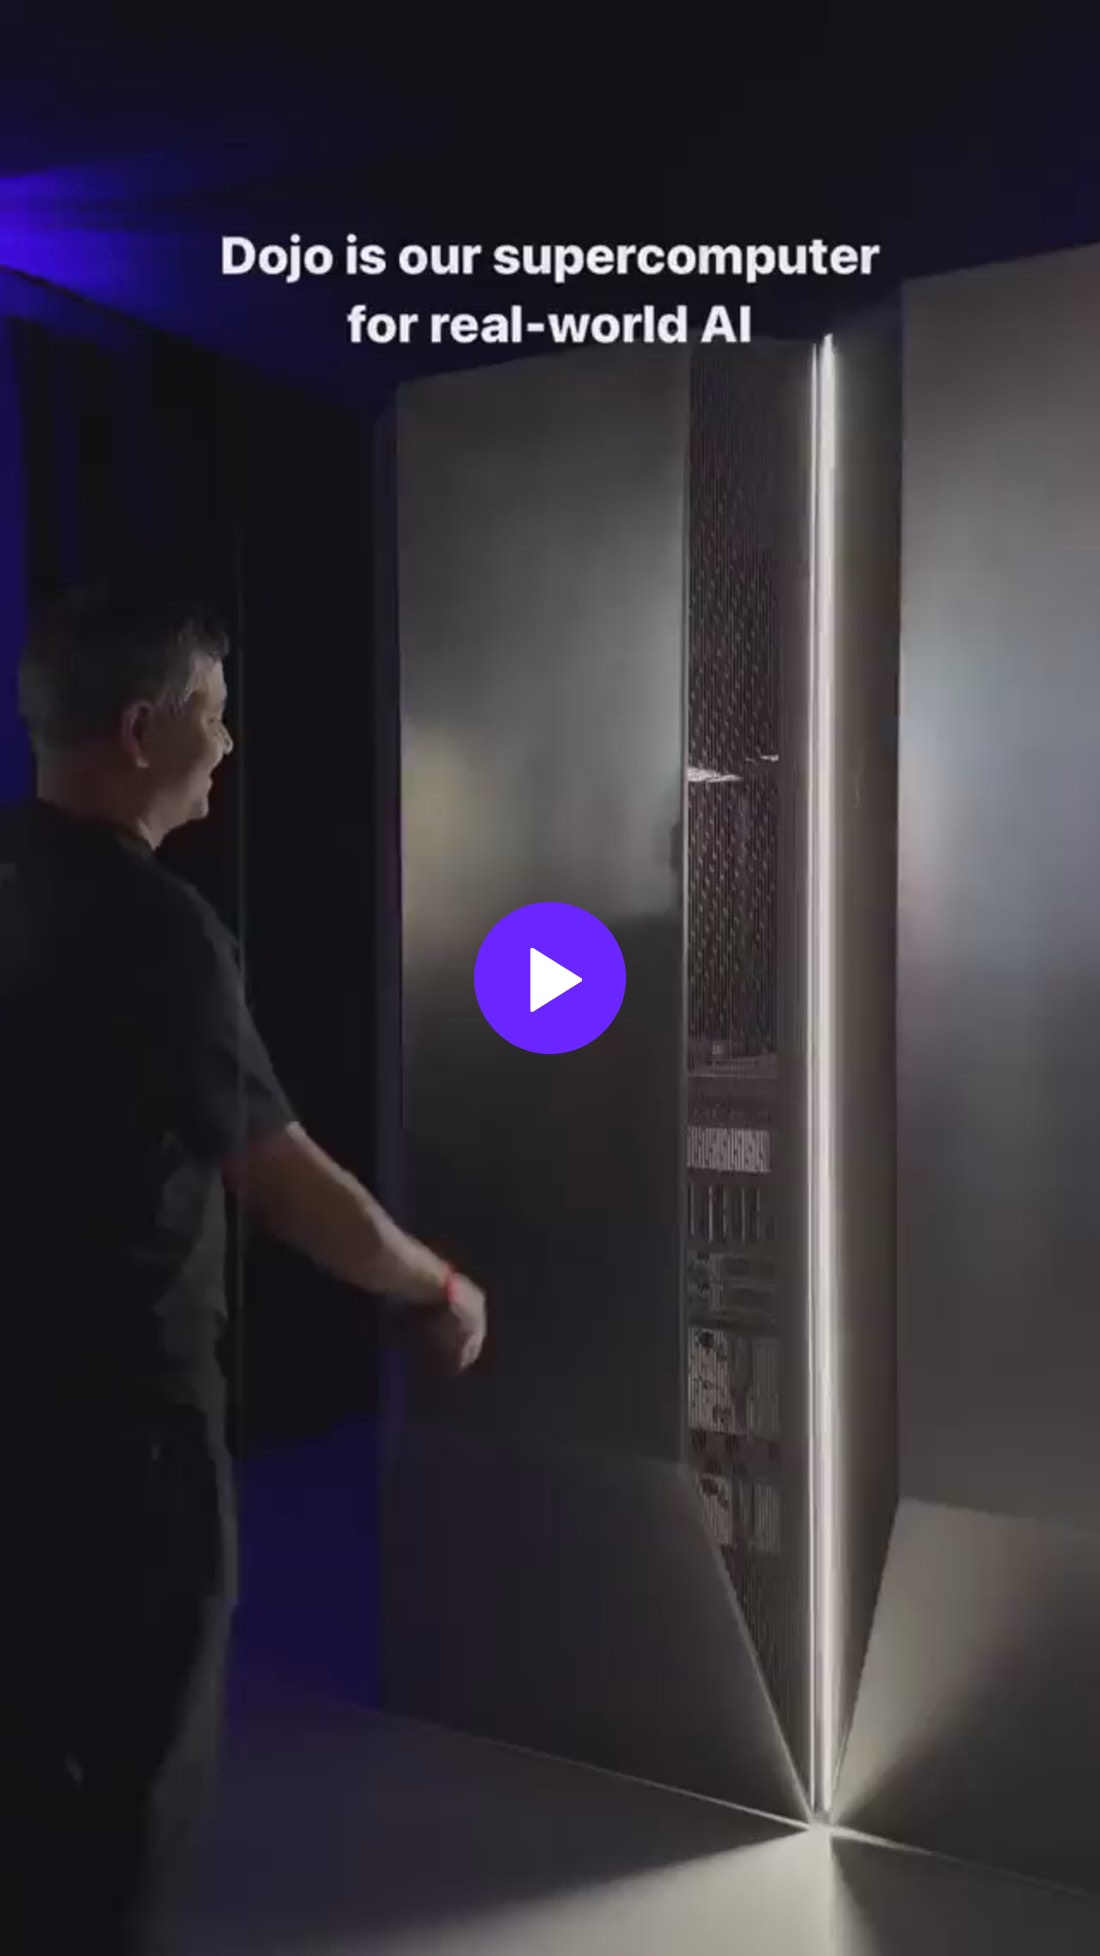 Tesla's Dojo Supercomputer finds Home